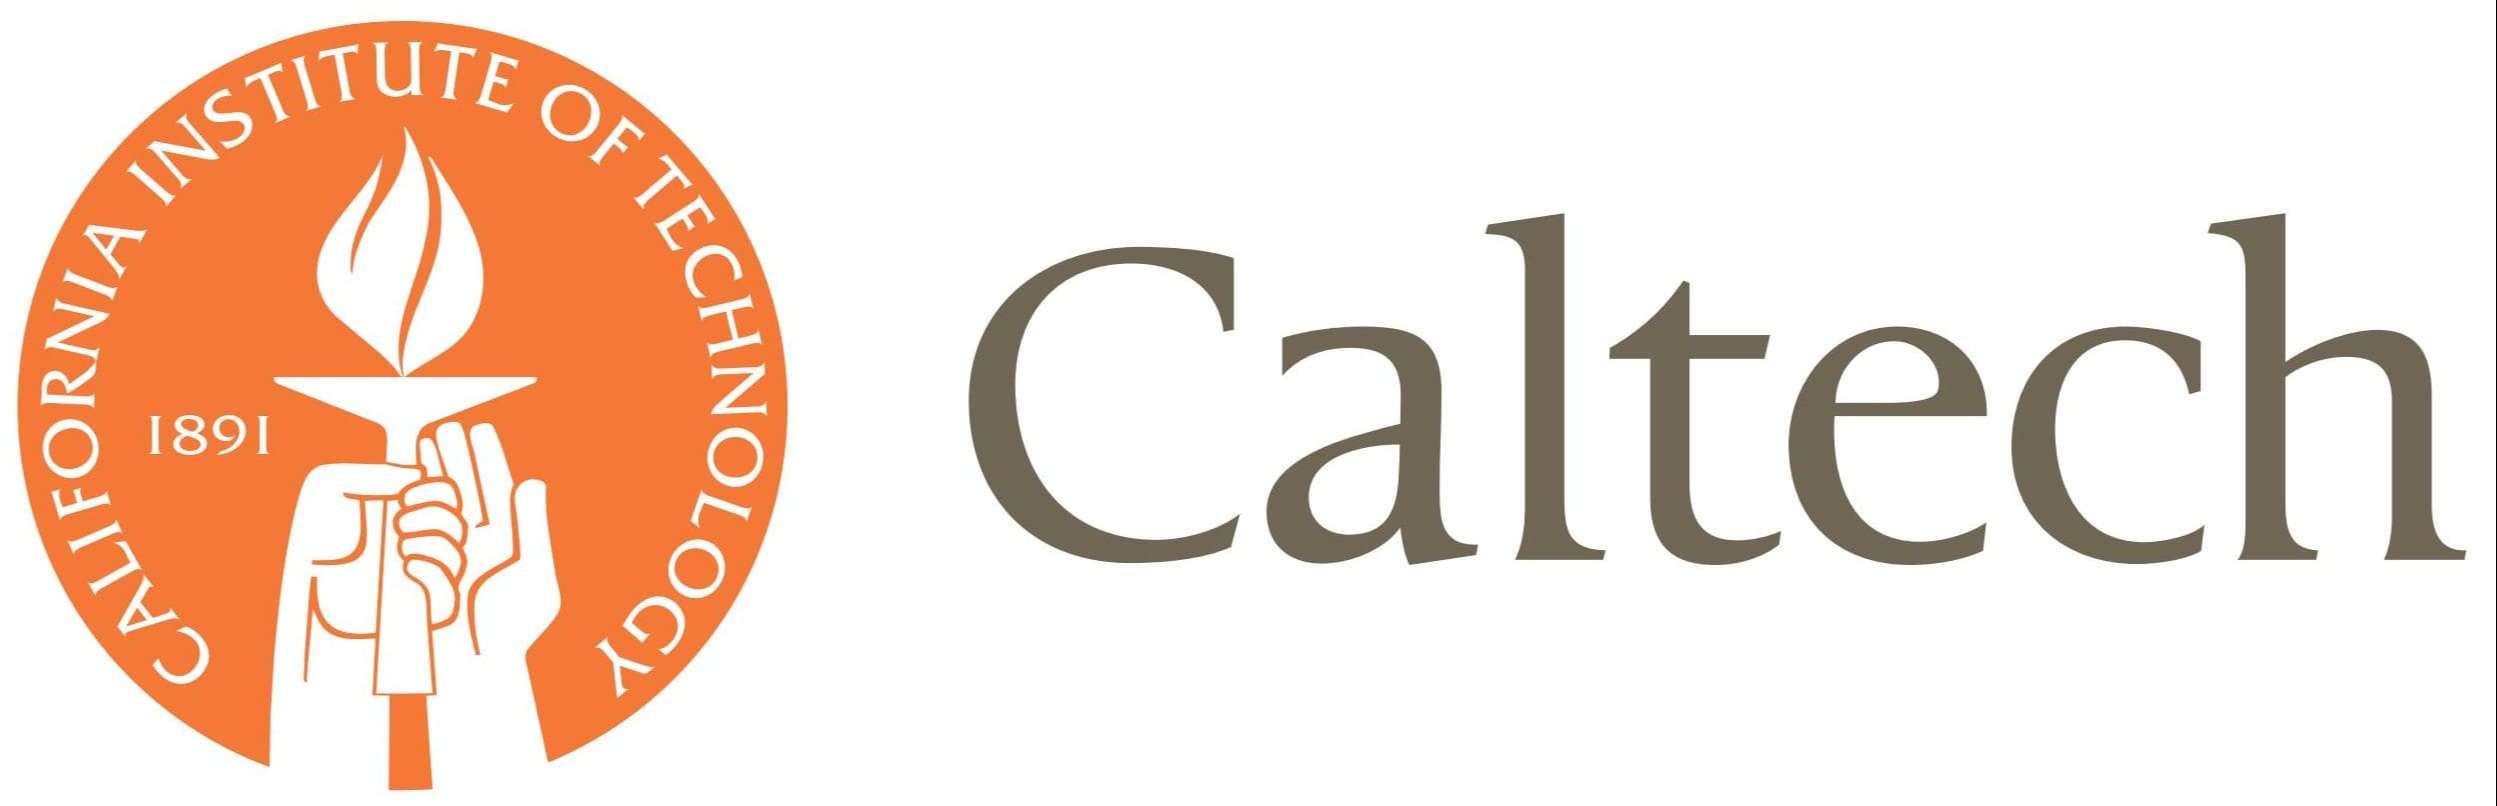 Caltech Logo California Institute of Technology